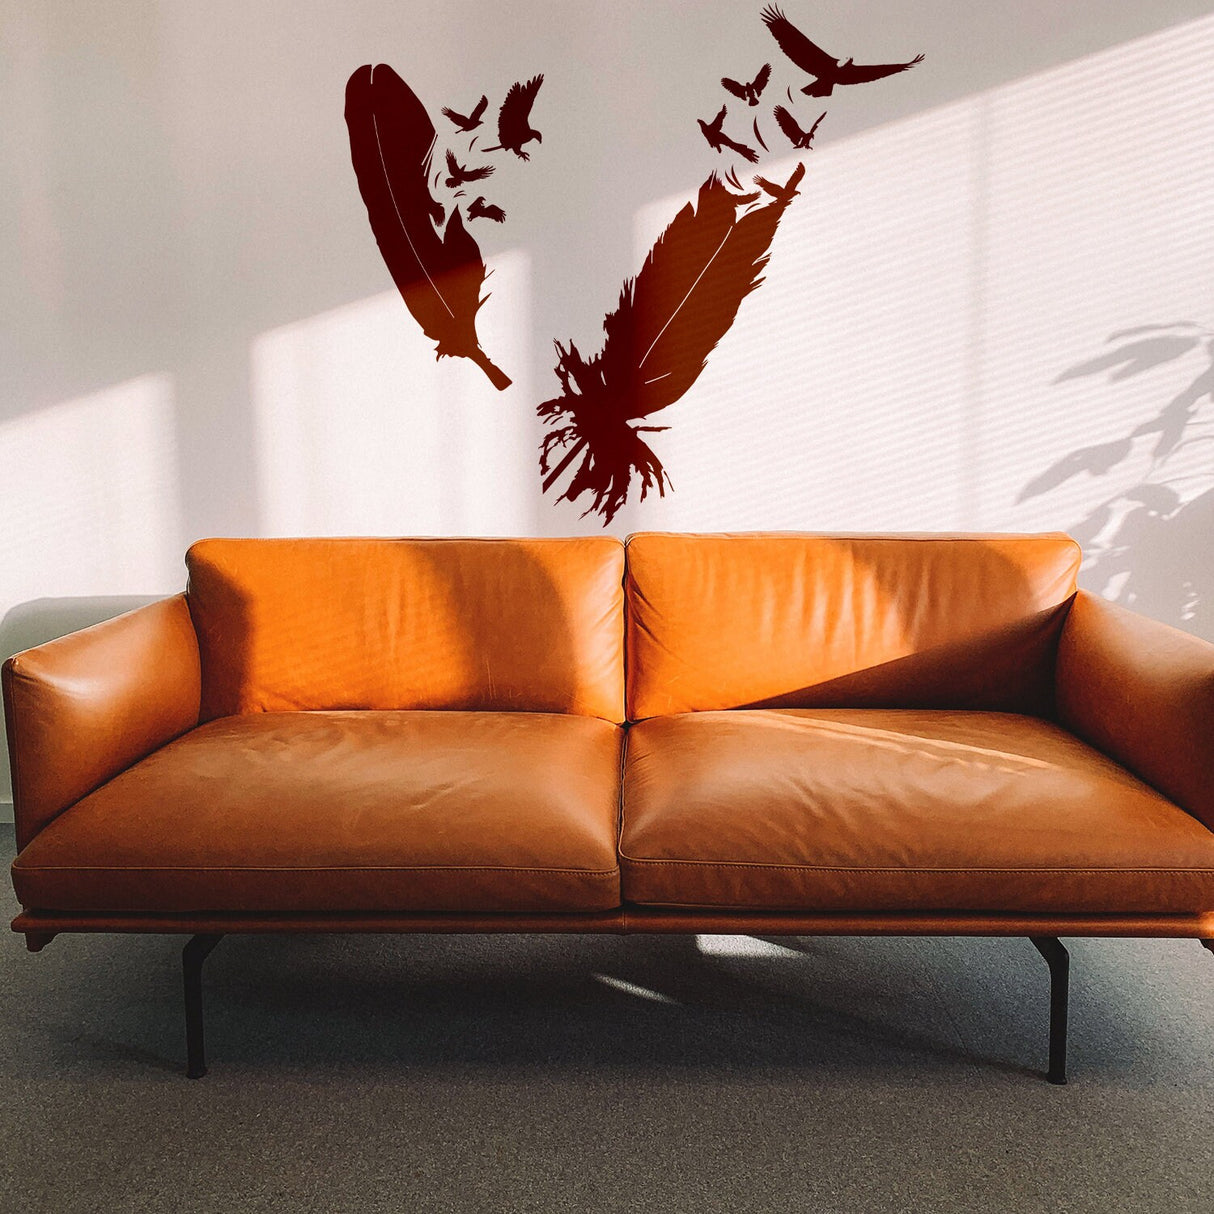 Bird Feather Wall Vinyl Sticker - Eagle Decor Flying Home Art Magic Nib Decal